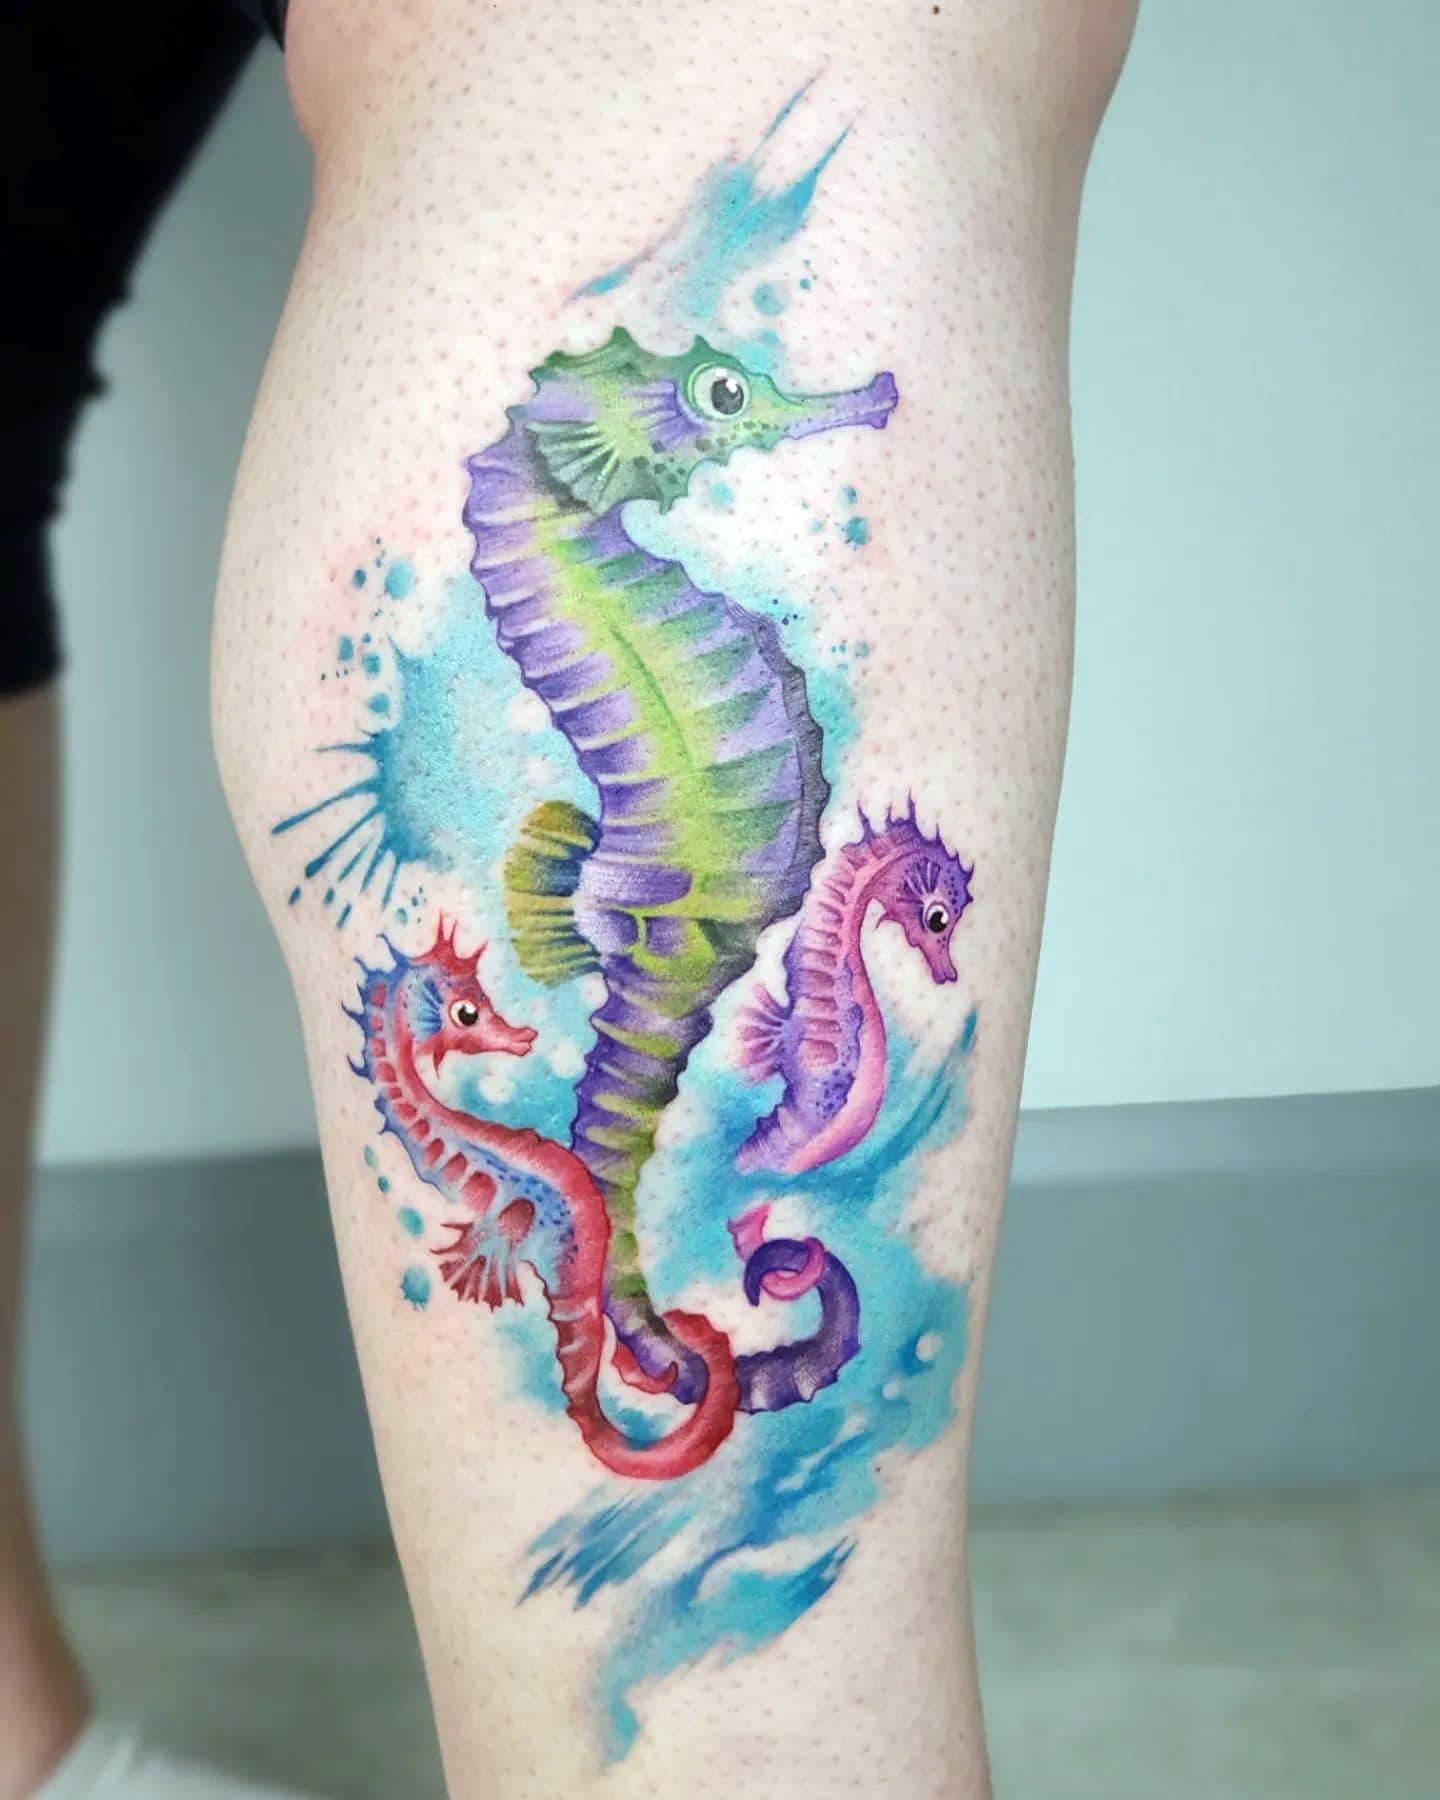 Imágenes de tatuajes de caballitos de mar de colores brillantes